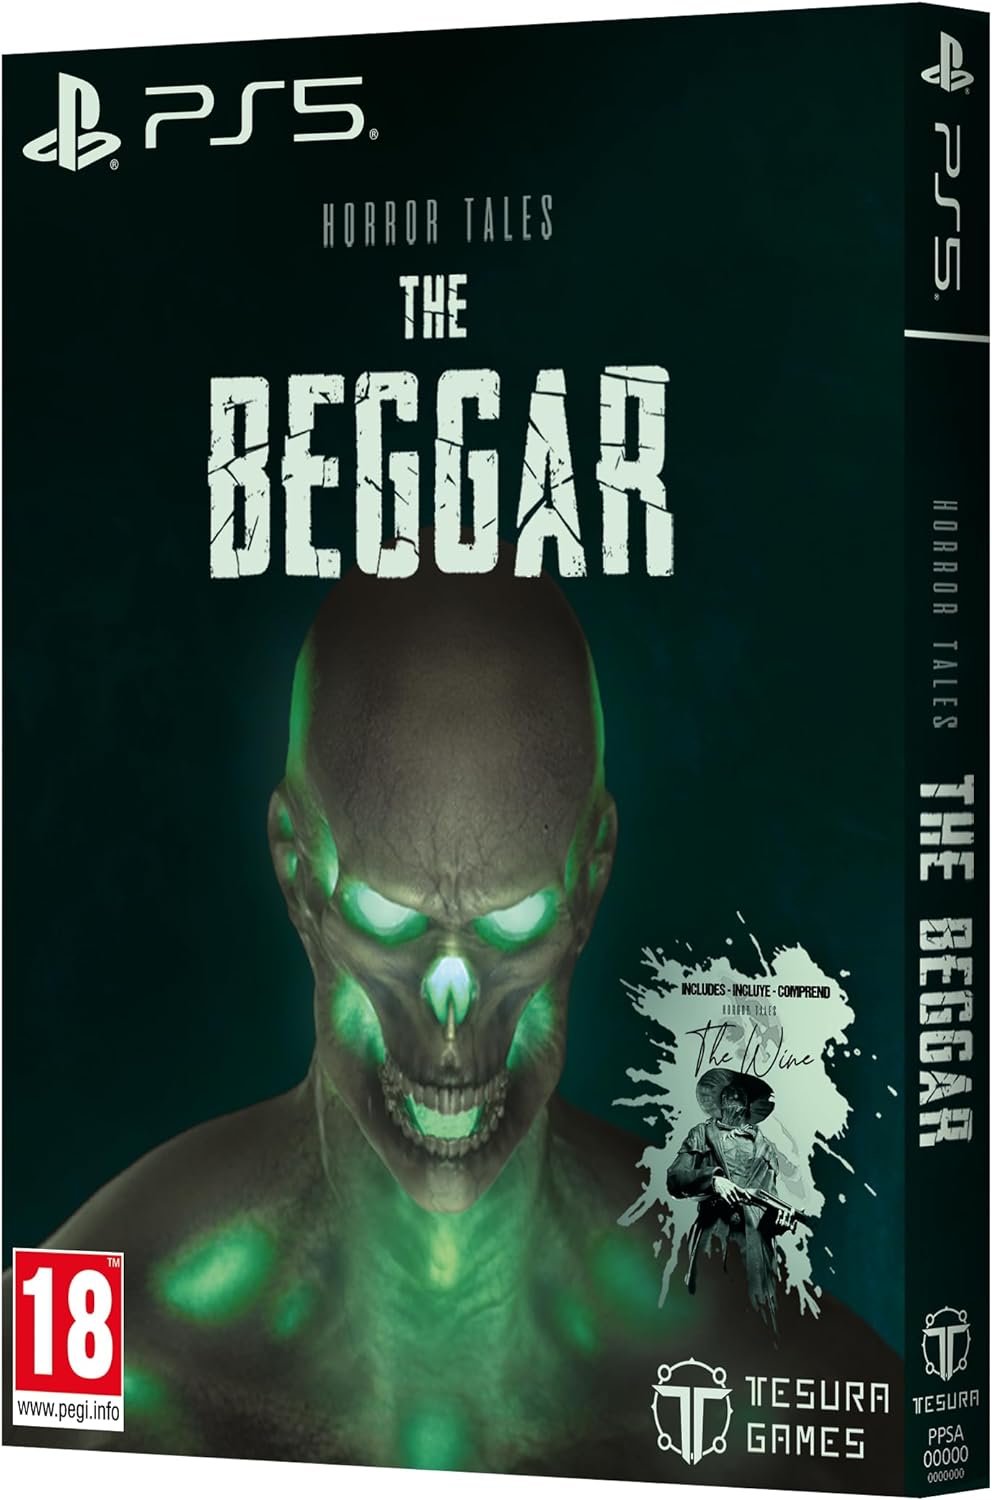 EAN : 8436016711586 - Horror Tales : The Beggar